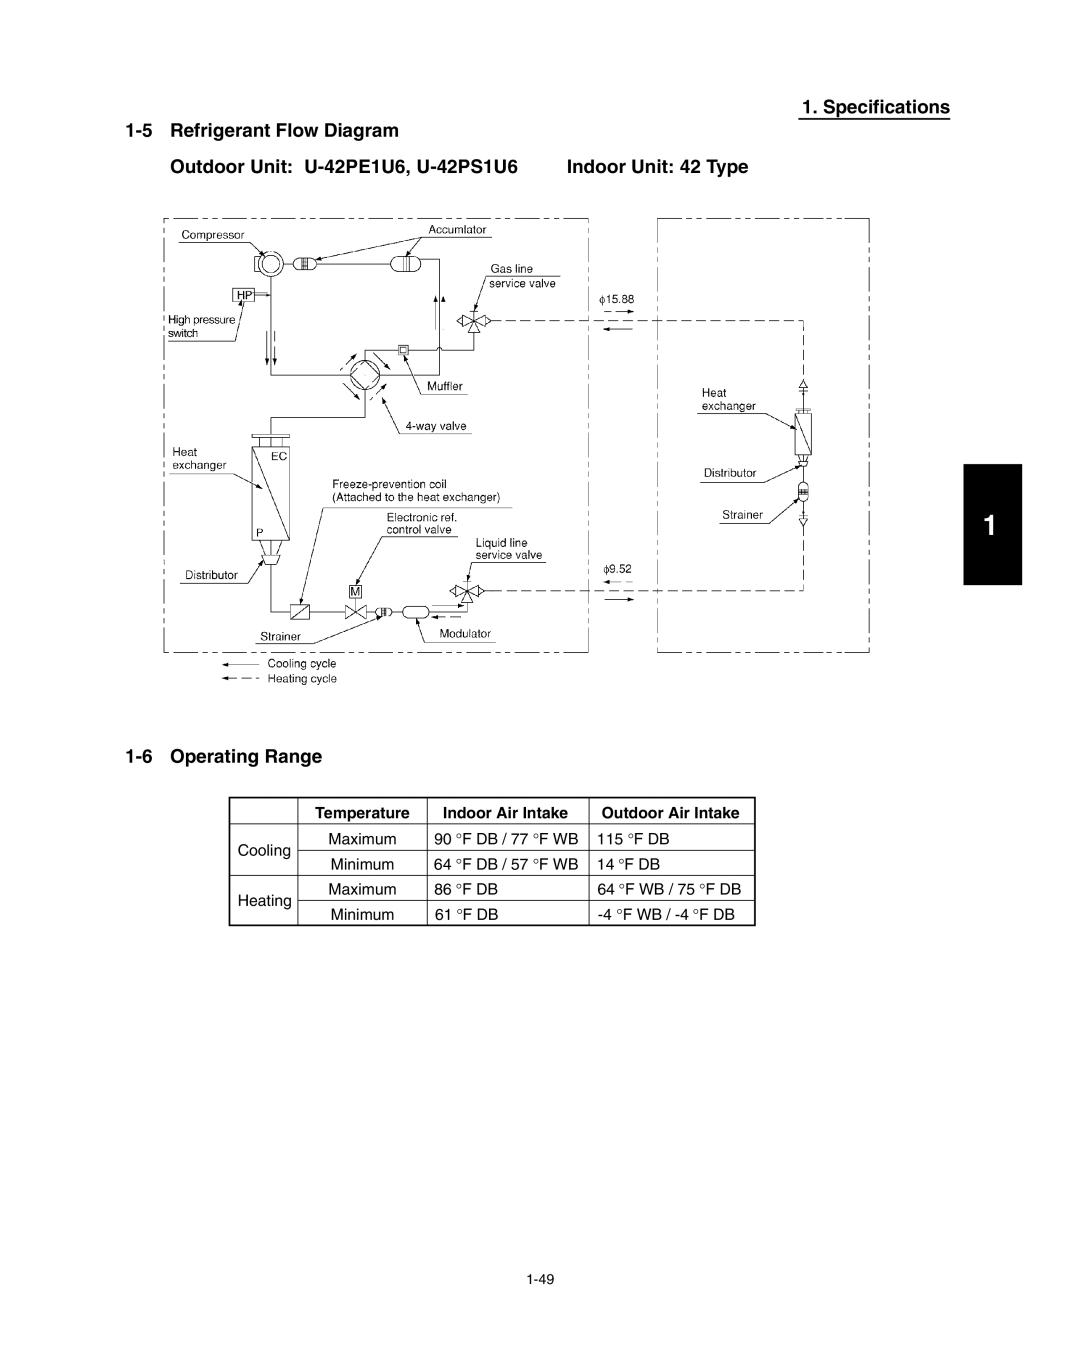 Panasonic R410A Outdoor Unit: U-42PE1U6, U-42PS1U6, 1-6Operating Range, Specifications, 1-5Refrigerant Flow Diagram 